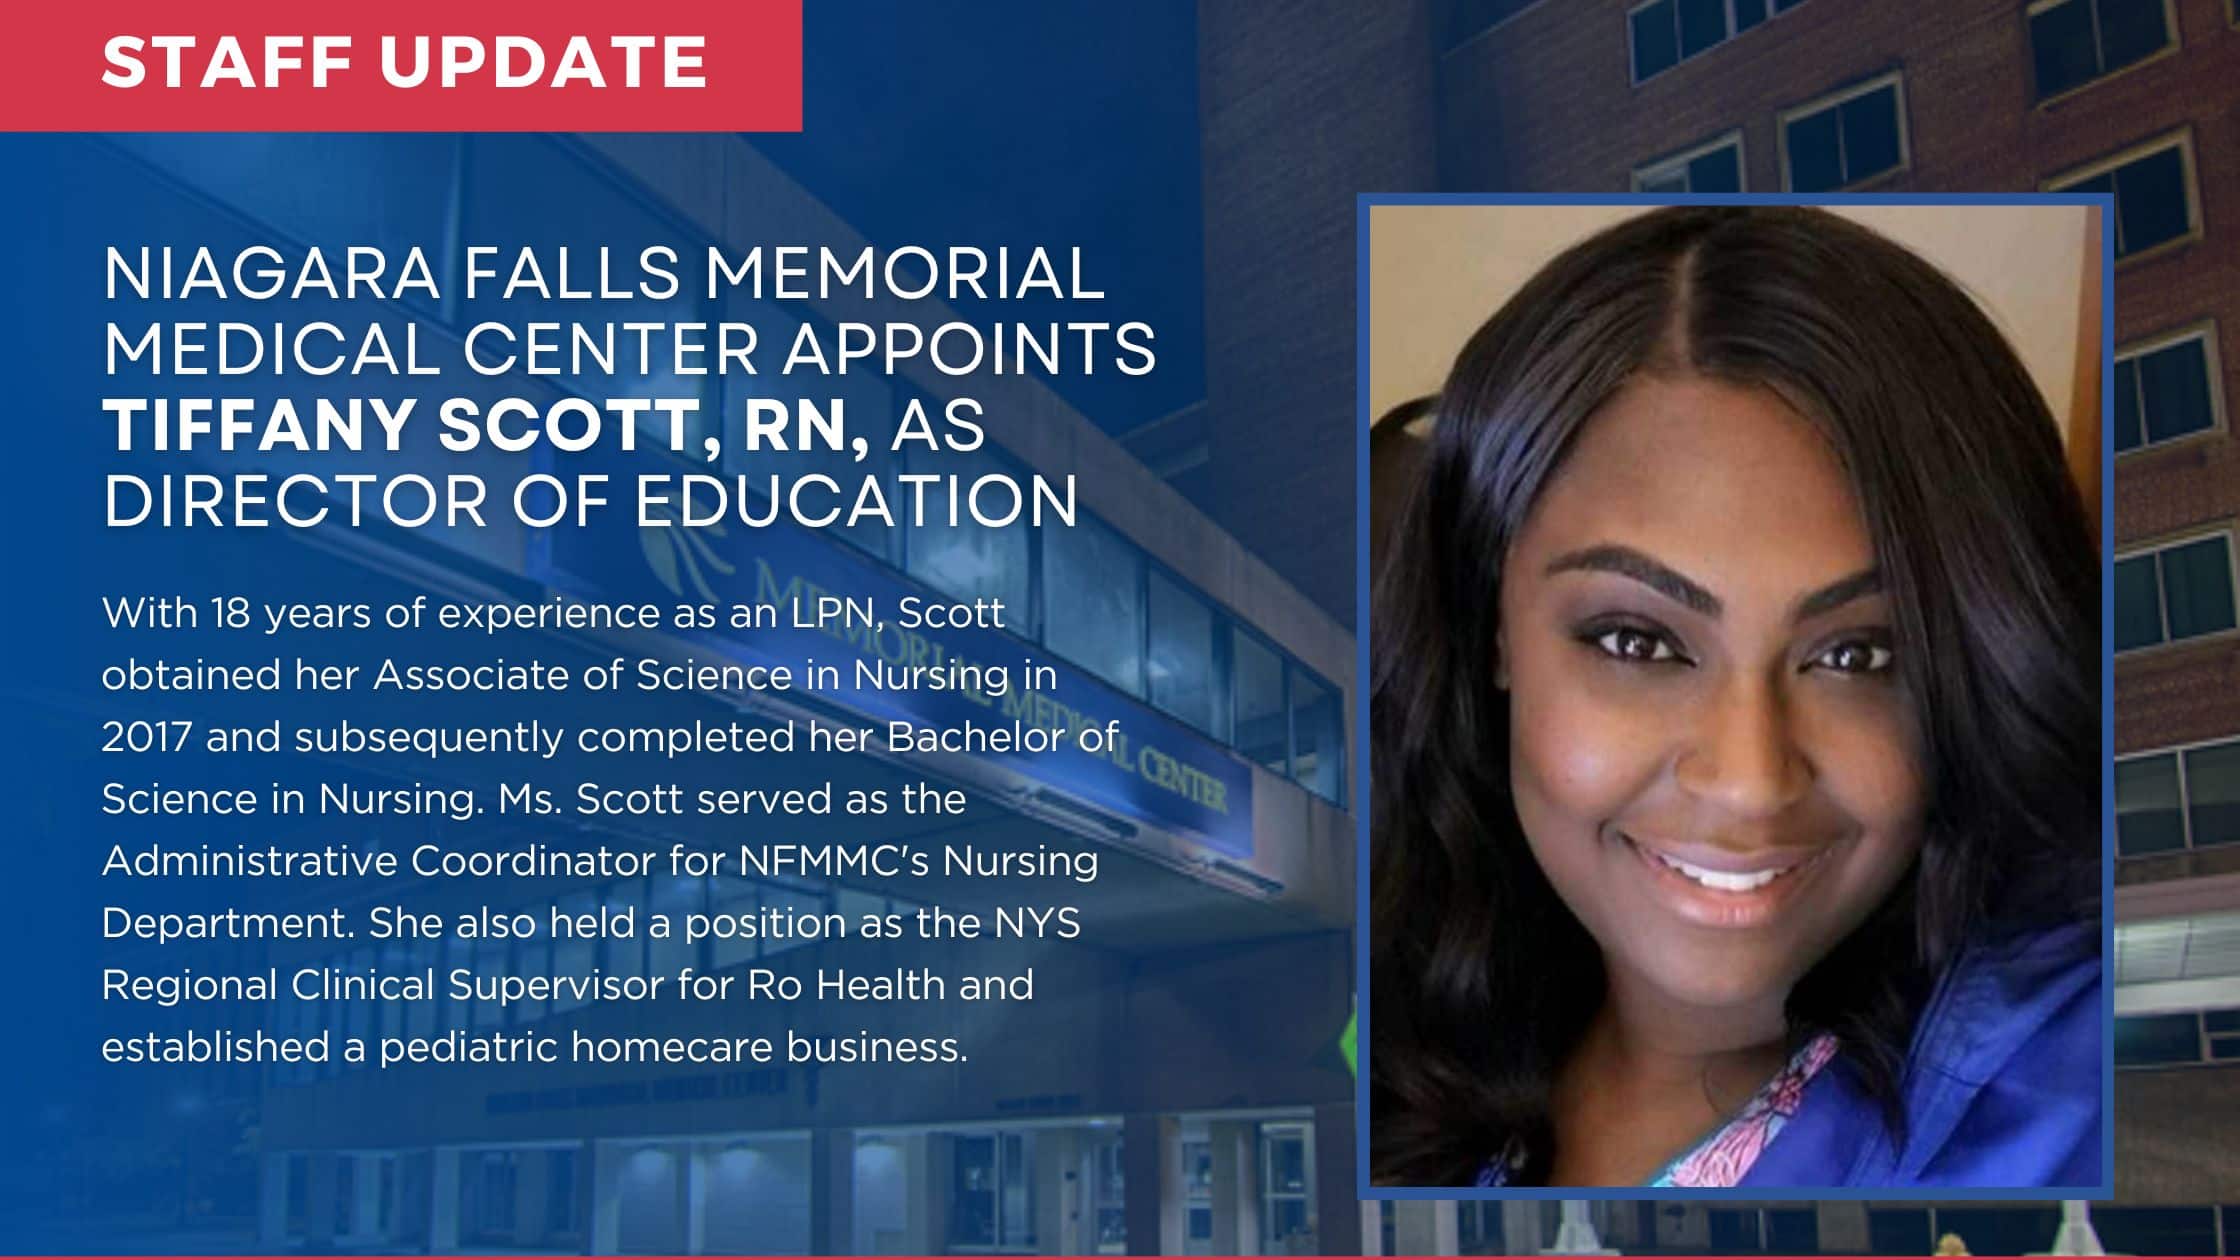 Niagara Falls Memorial Medical Center Appoints Tiffany Scott, RN, as Director of Education